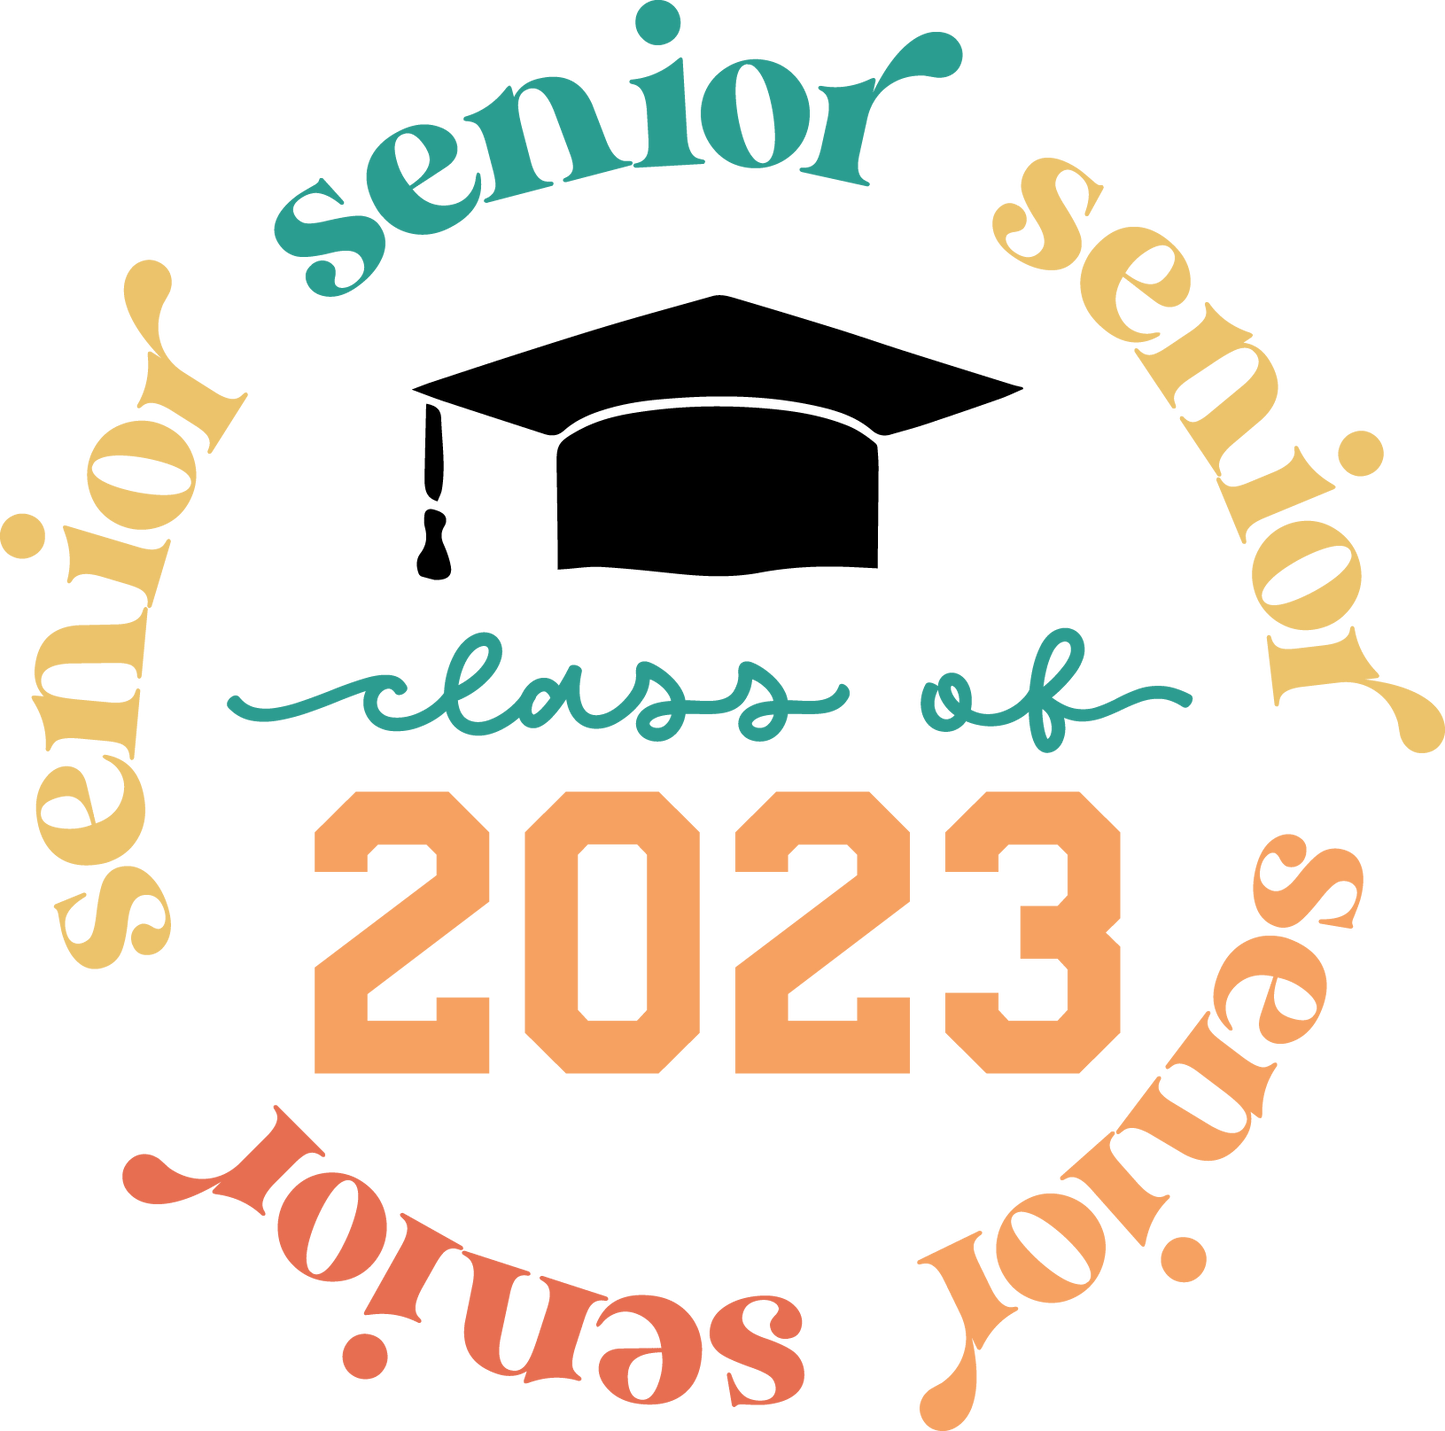 Senior 2023  circle Design Transfer